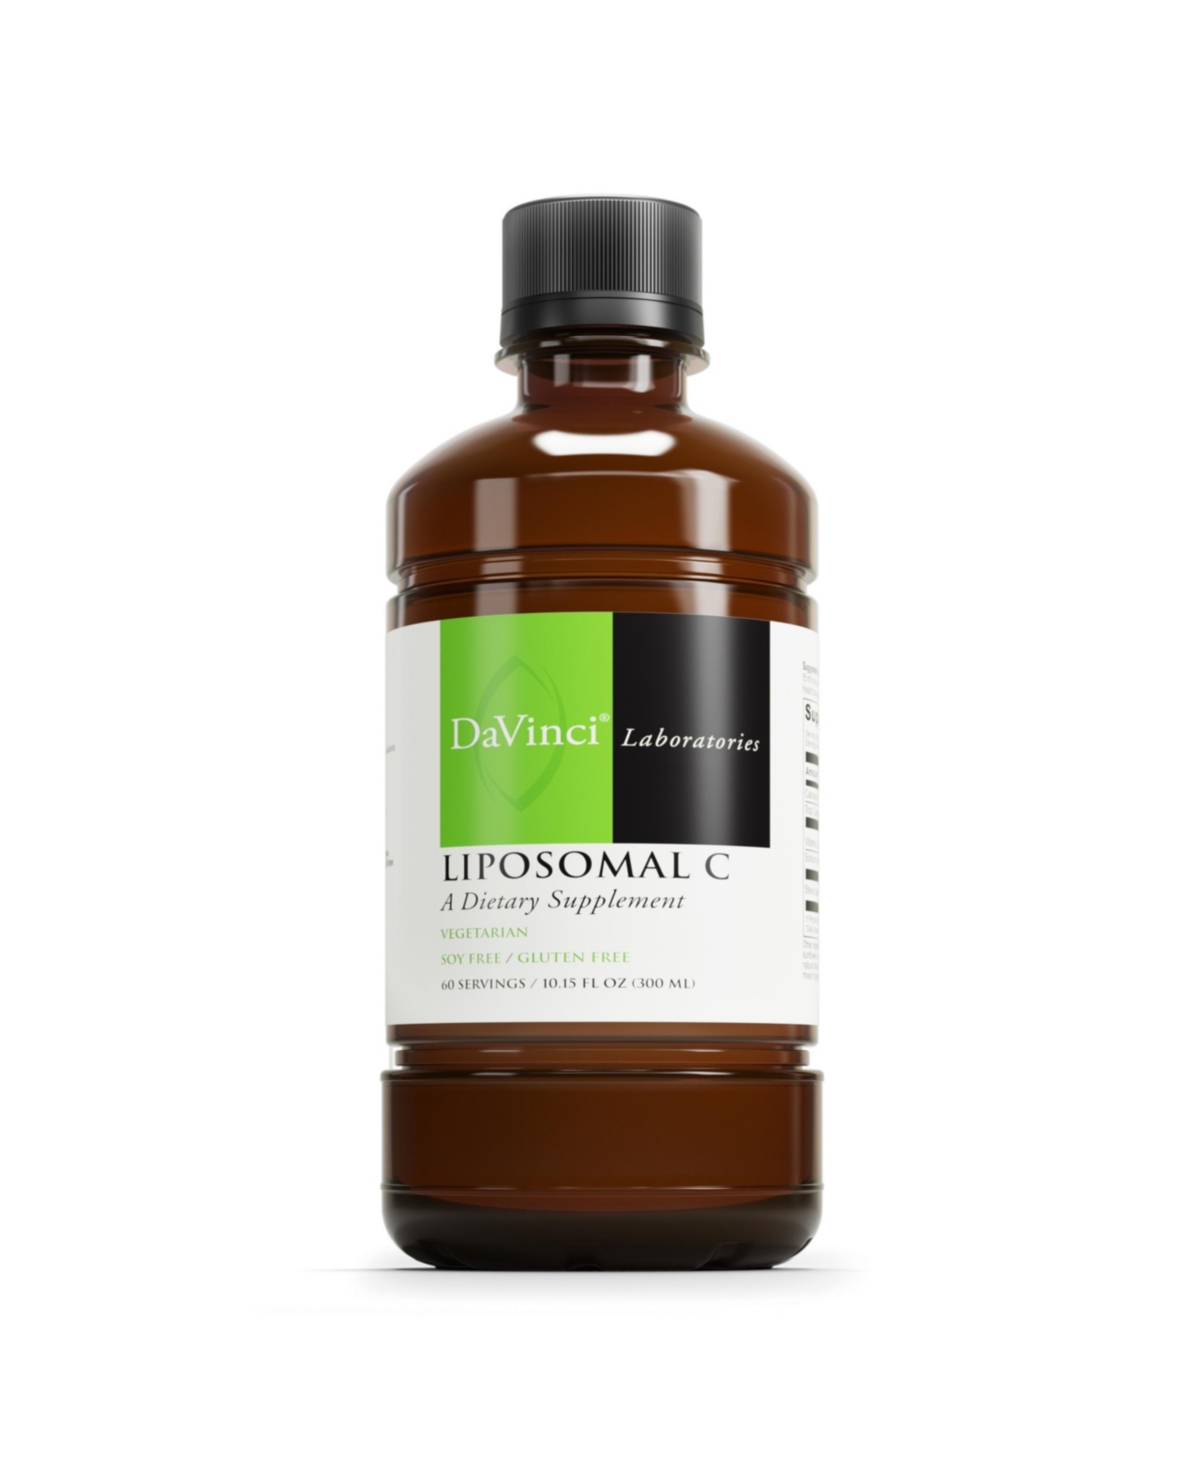 DaVinci Labs Liposomal C - Liquid Antioxidant Supplement to Support the Immune System, Collagen Maintenance and Gum Tissue Health - With Vitamin C - G